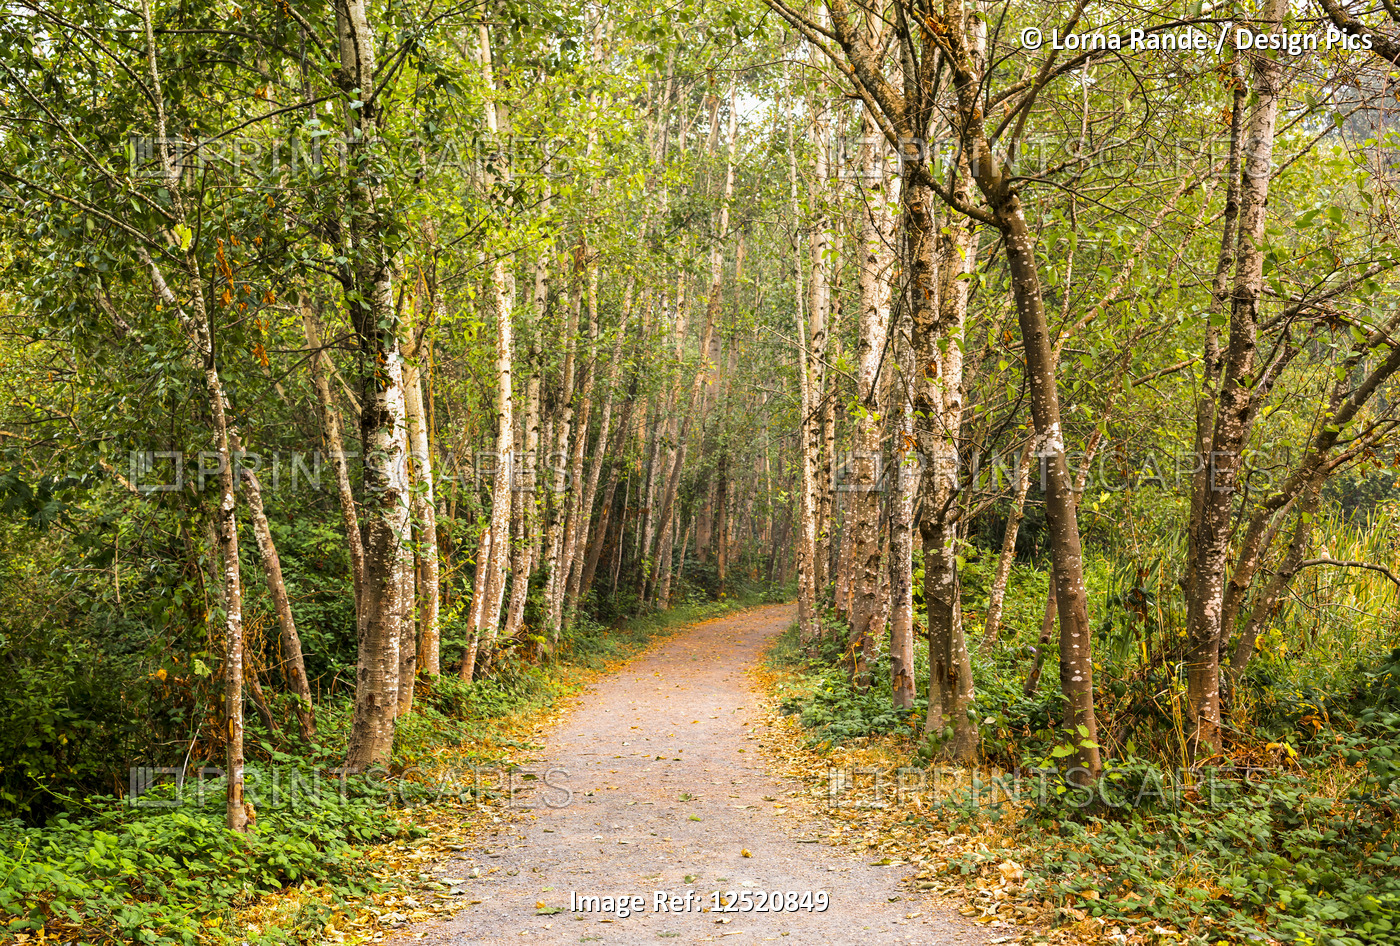 A path through a forest of alder trees; Yarrow, British Columbia, Canada